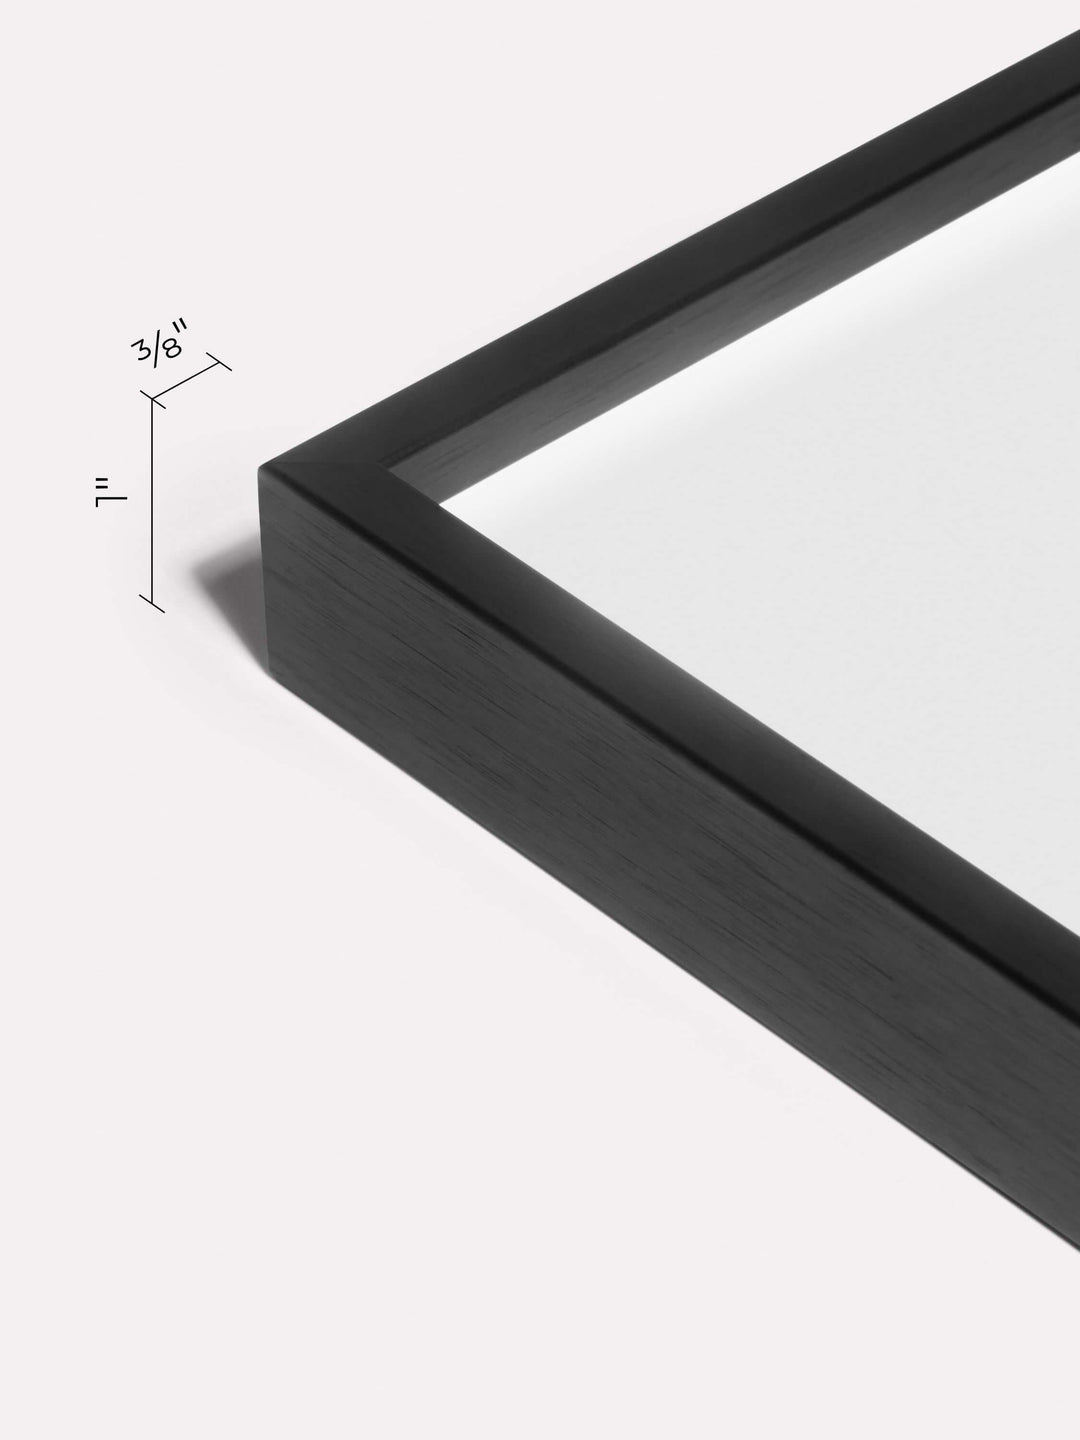 5x7-inch Thin Frame, Black - Close-up view